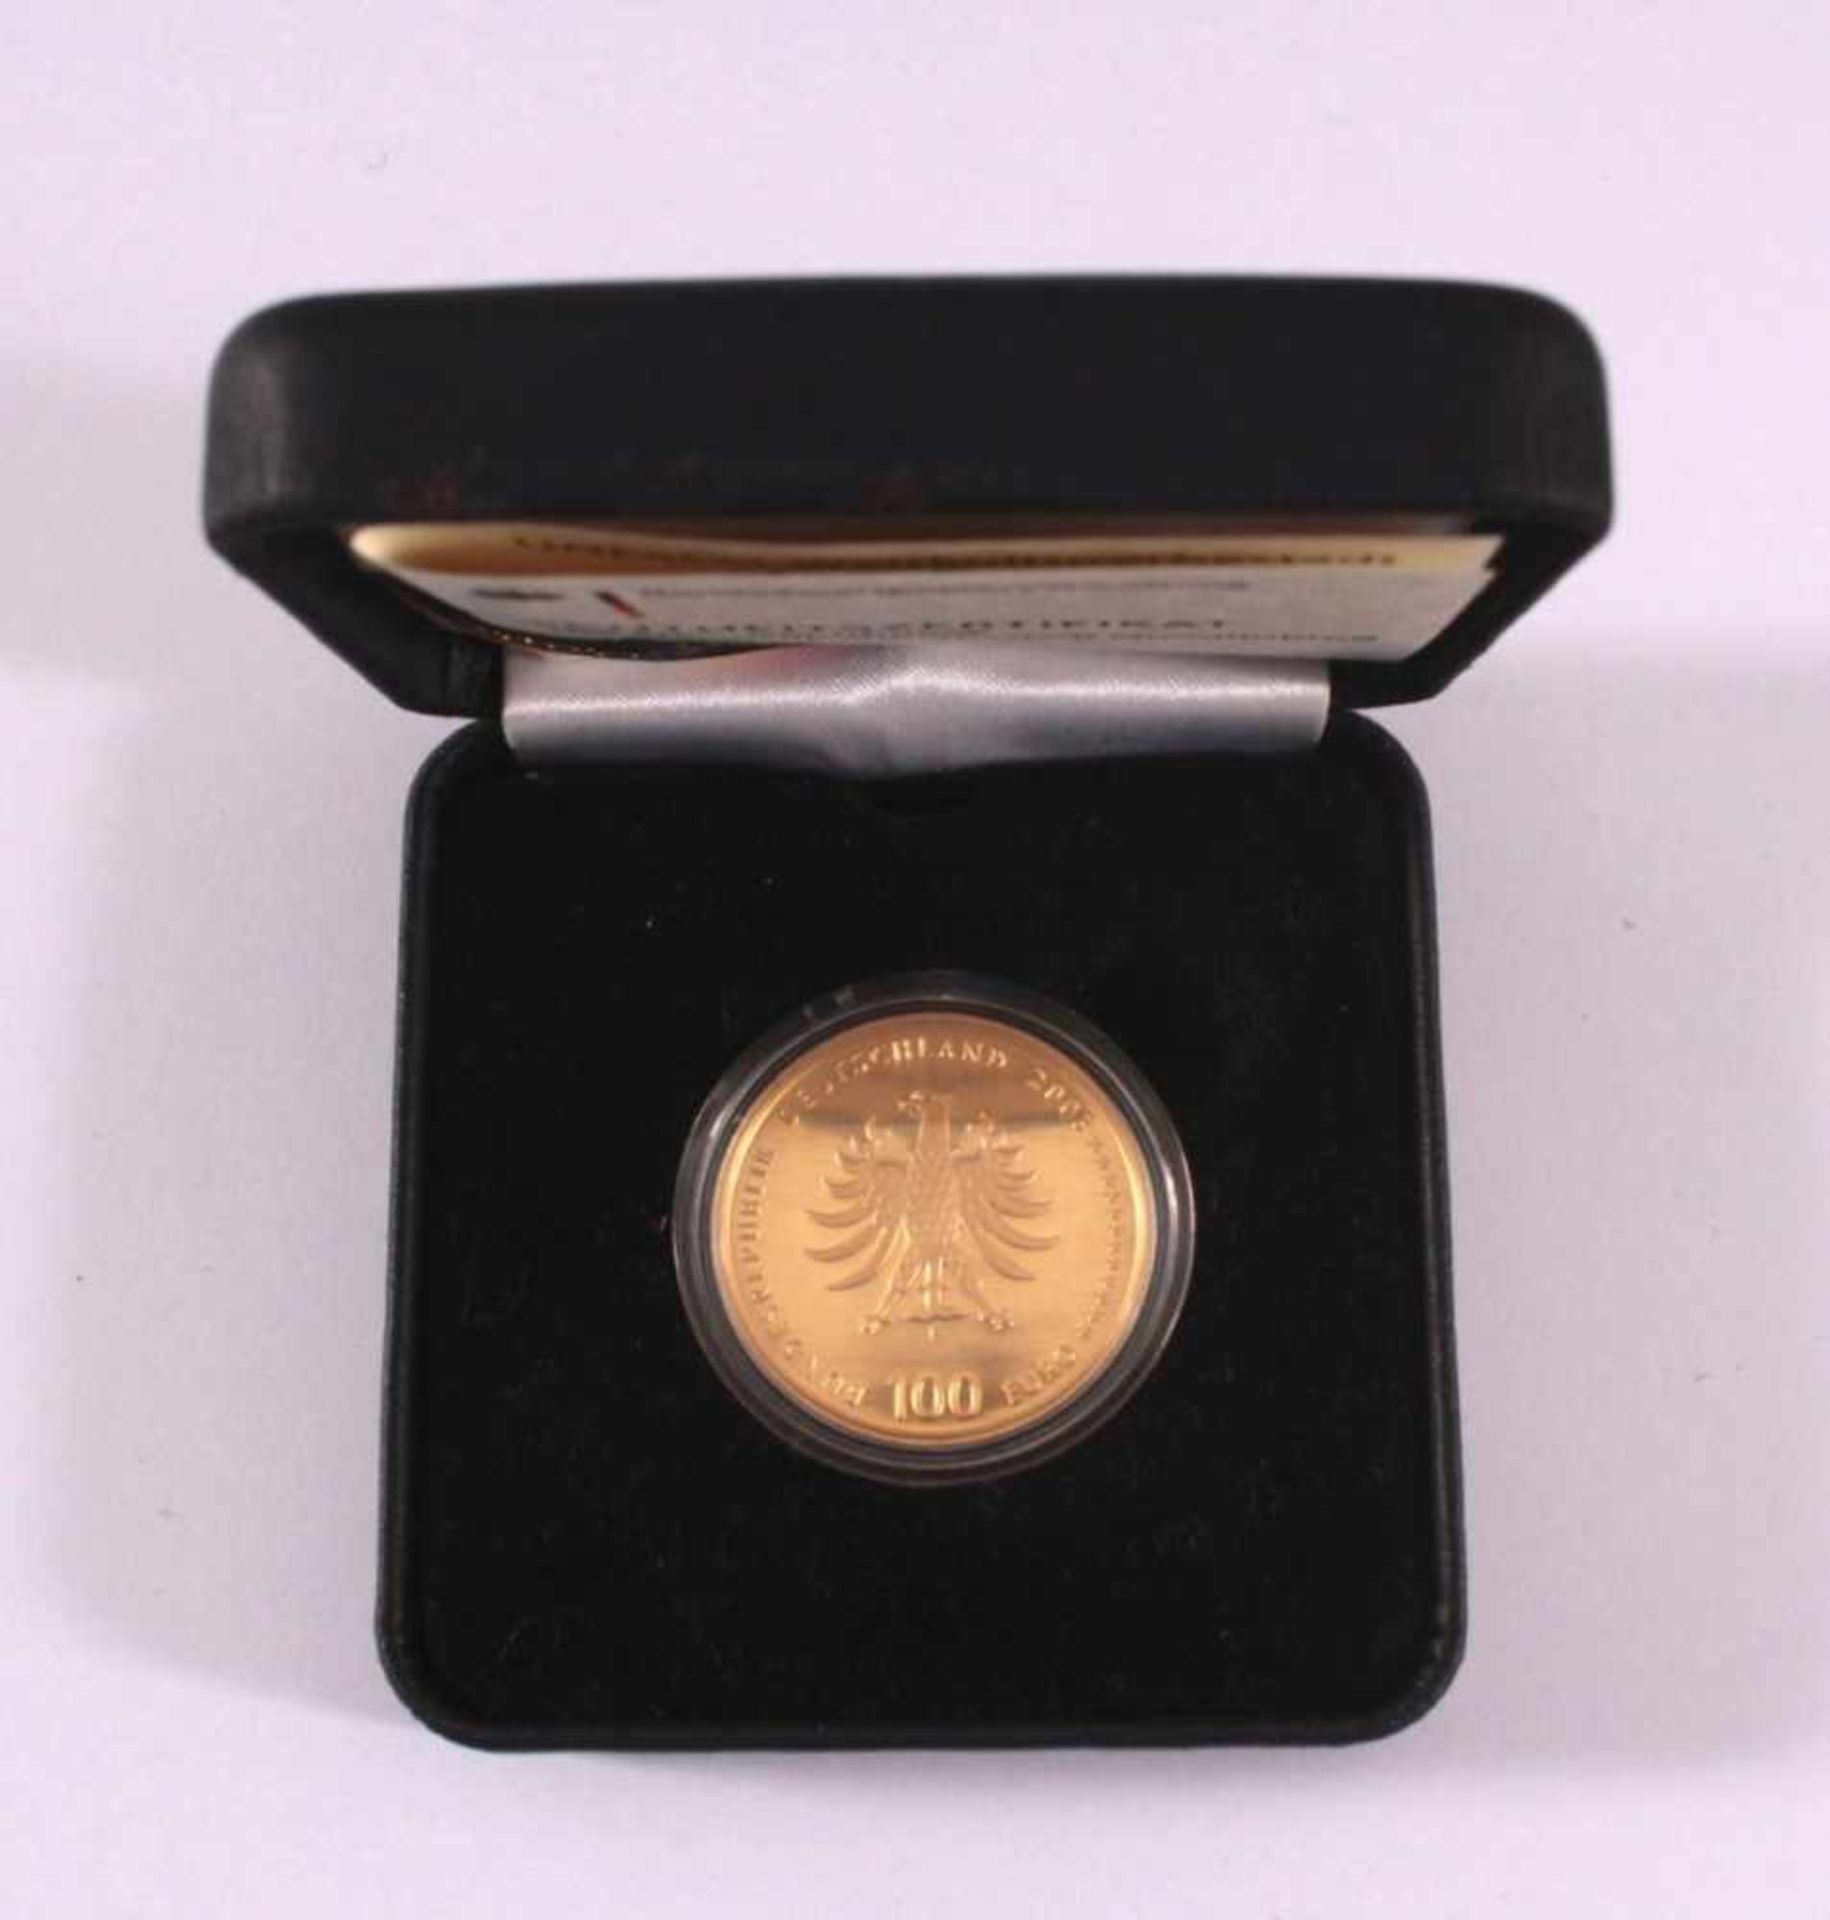 Goldmünze 100 Euro Quedlinburg1. November 2003, Gold, 1/2 Unze (15,55 g), in Kapsel, mitZertifikat - Bild 3 aus 3